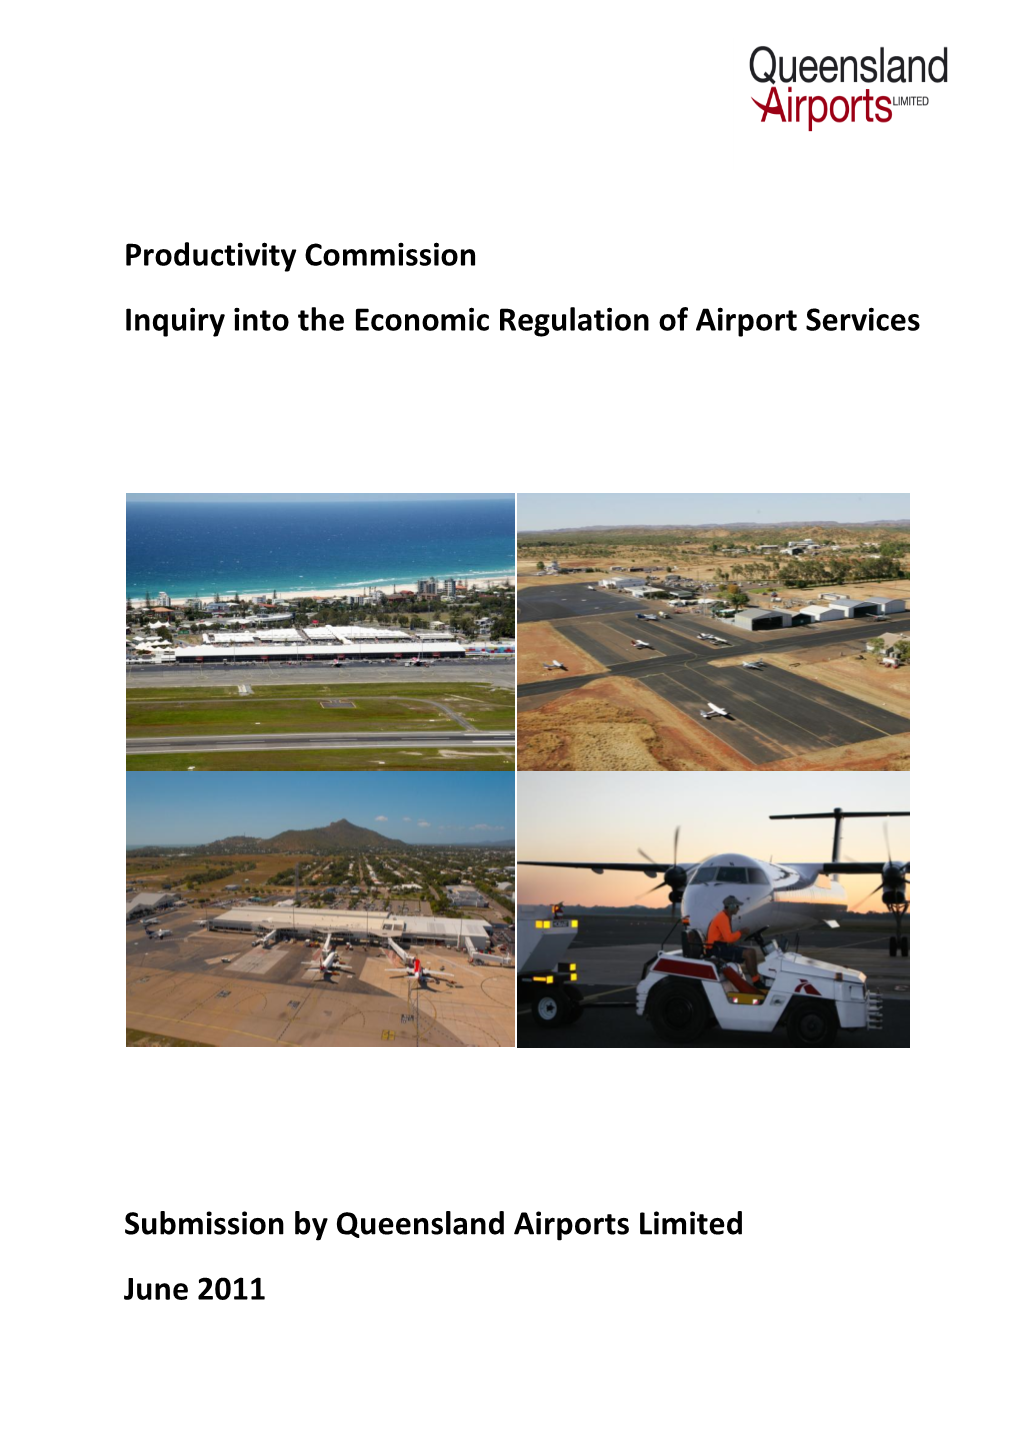 Economic Regulation of Airport Services